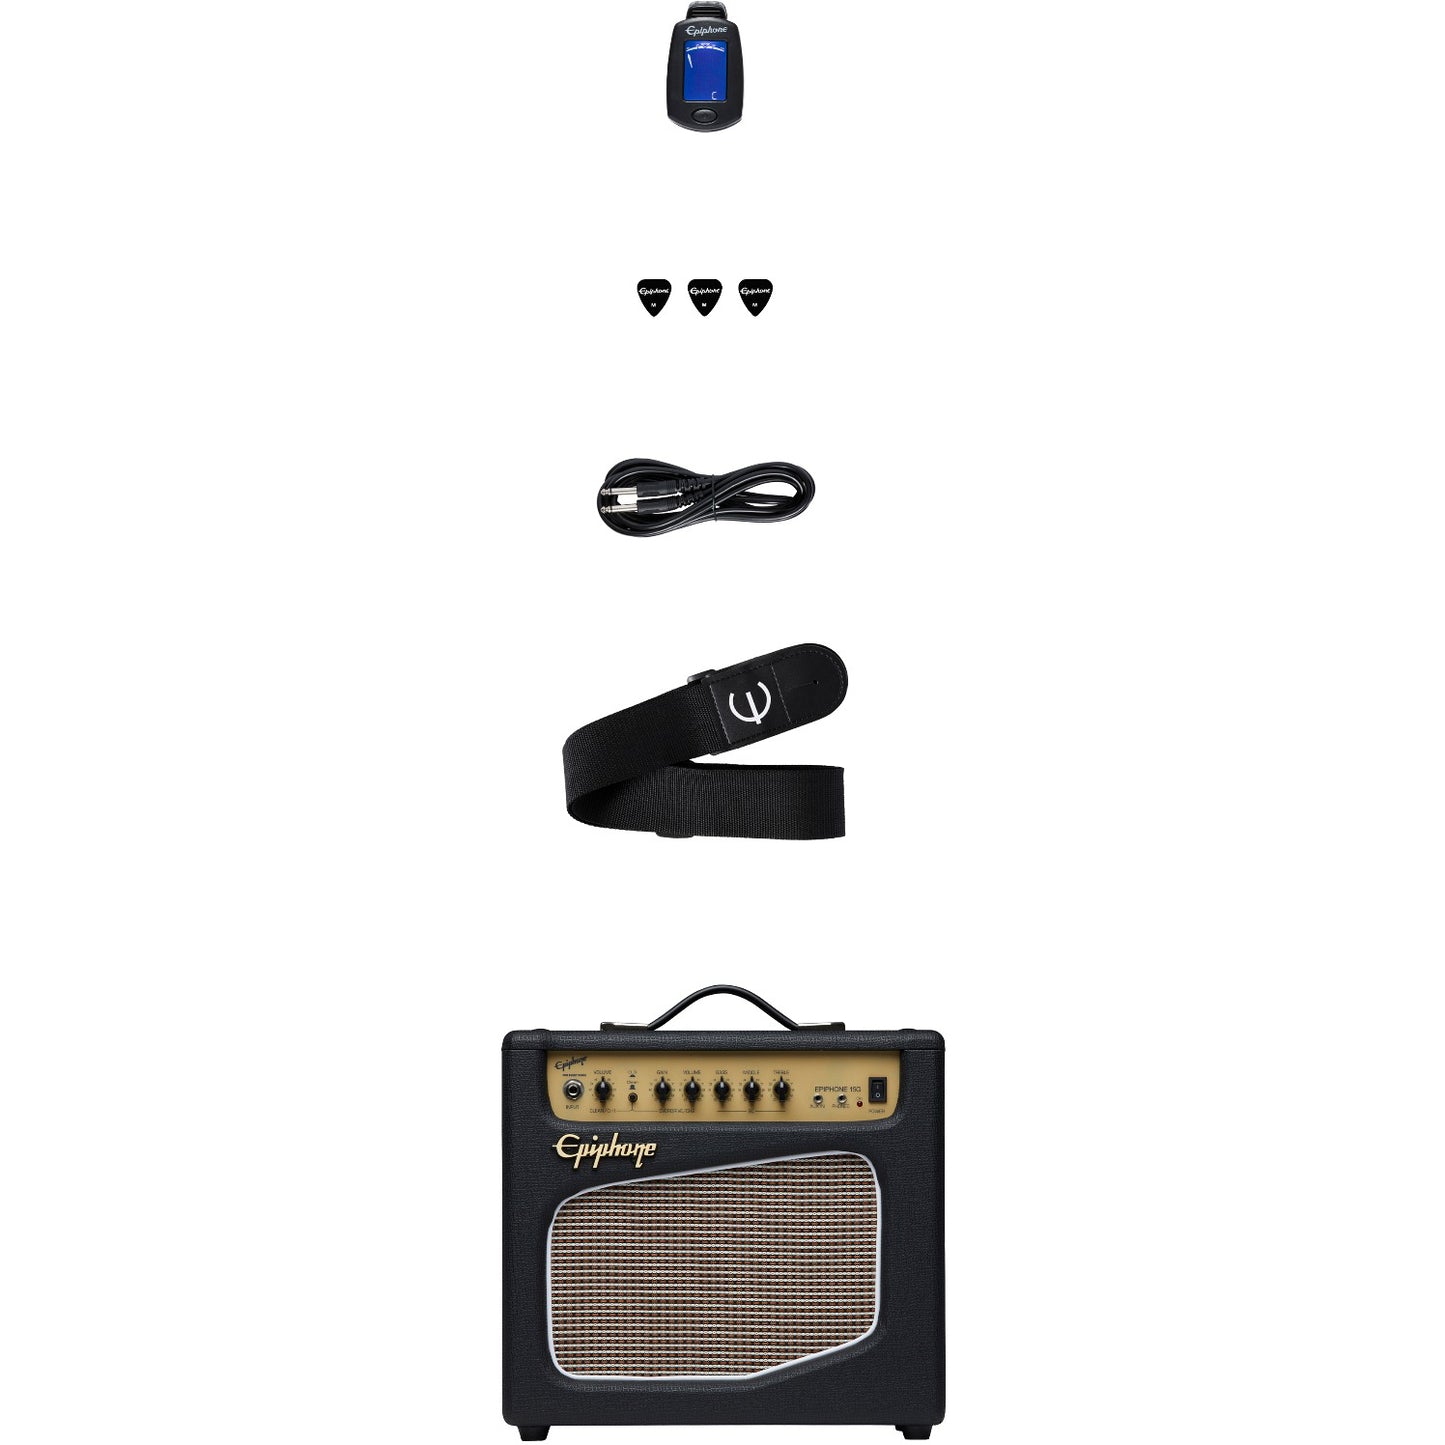 Epiphone Billie Joe Armstrong Les Paul Junior Electric Guitar Player Pack